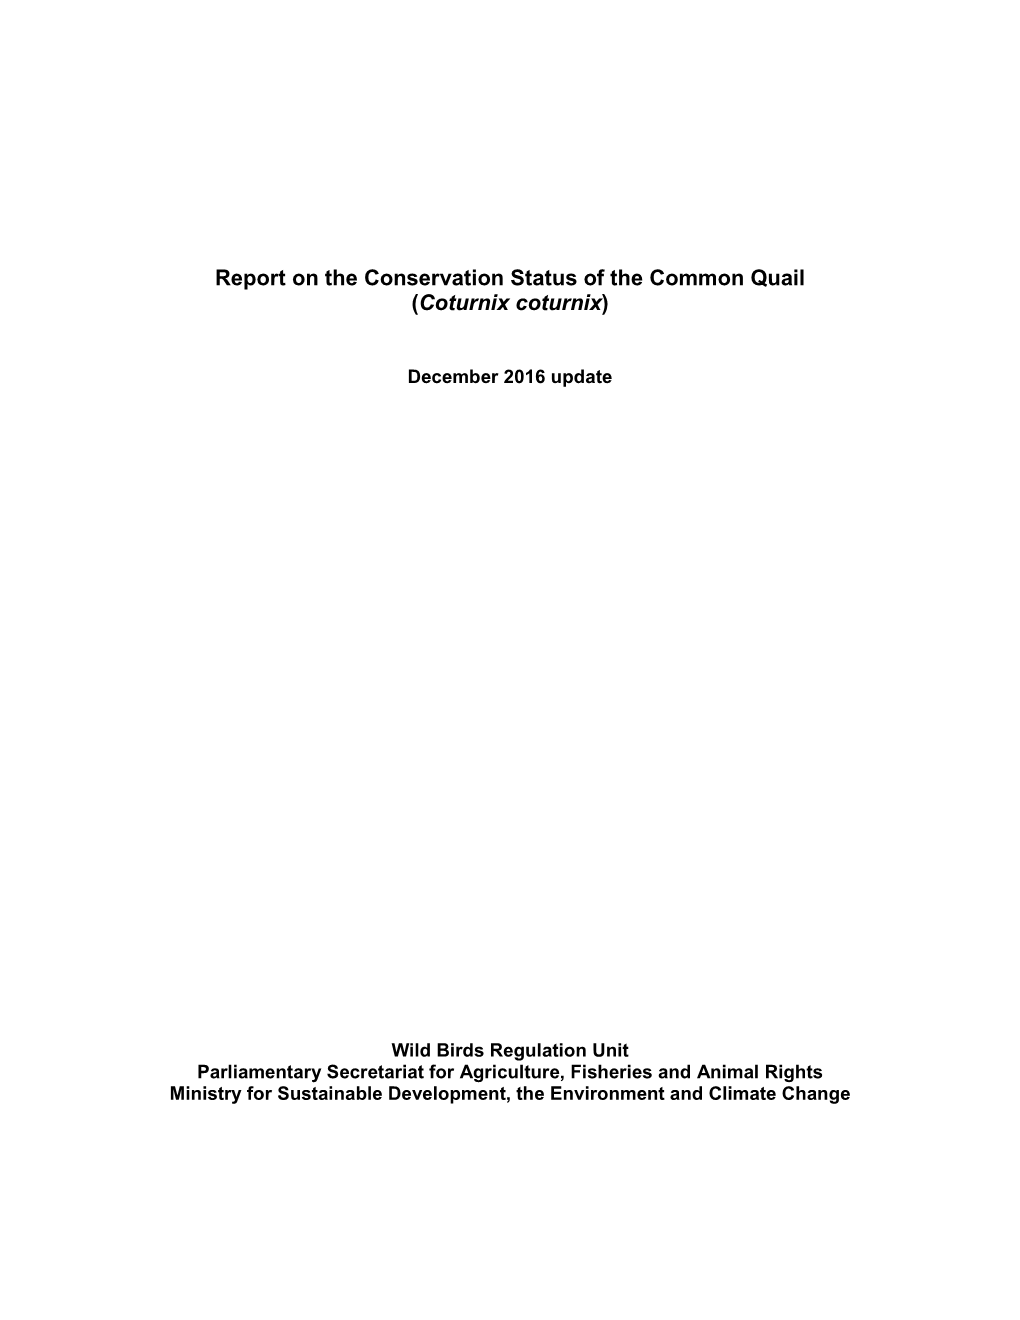 Conservation Status of Common Quail Nov 2016